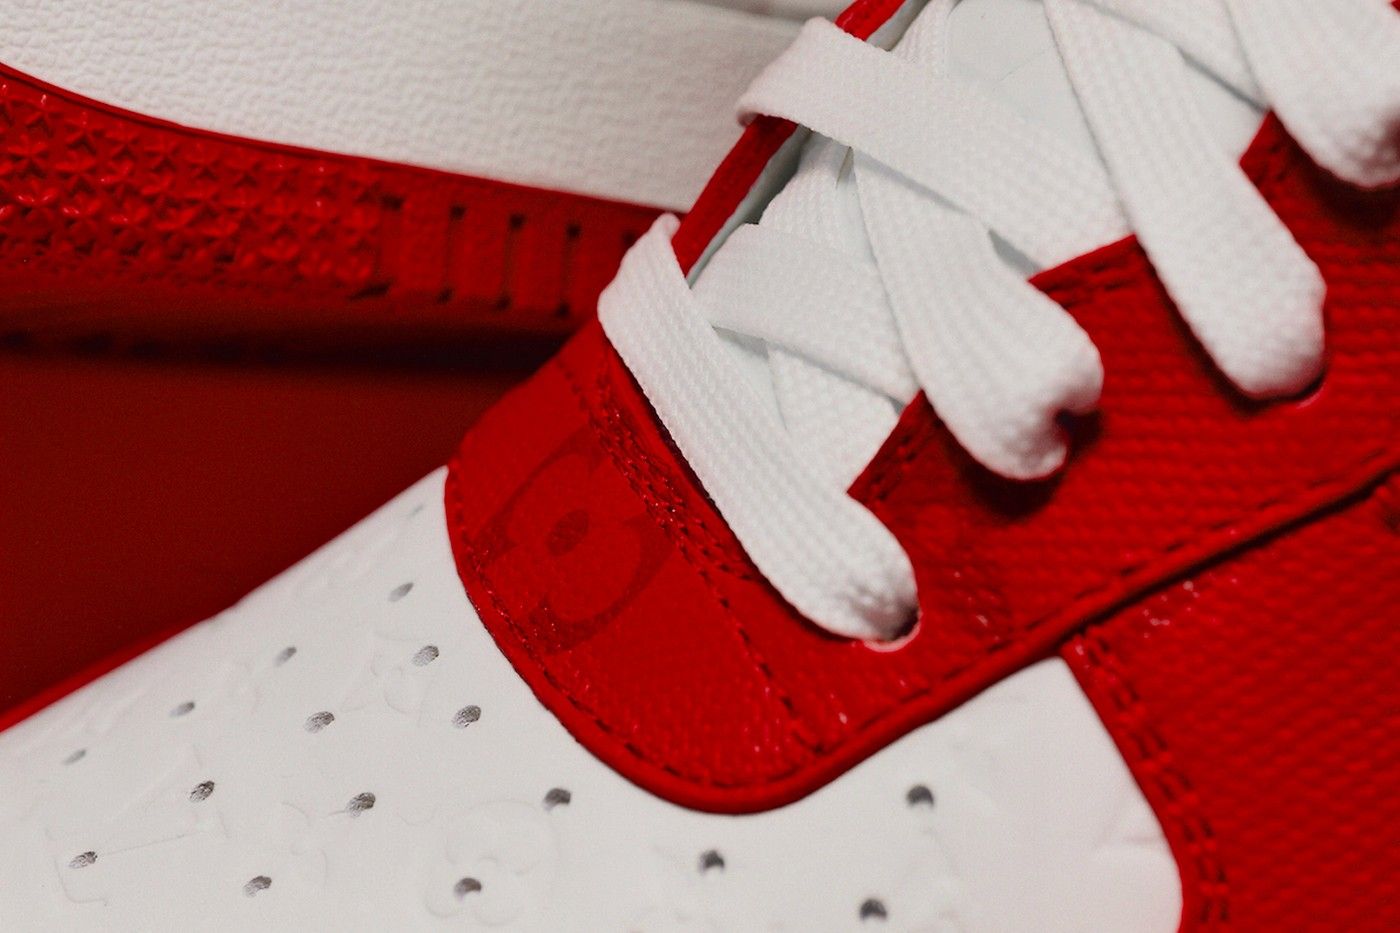 Louis Vuitton x Nike Air Force 1 Release Info